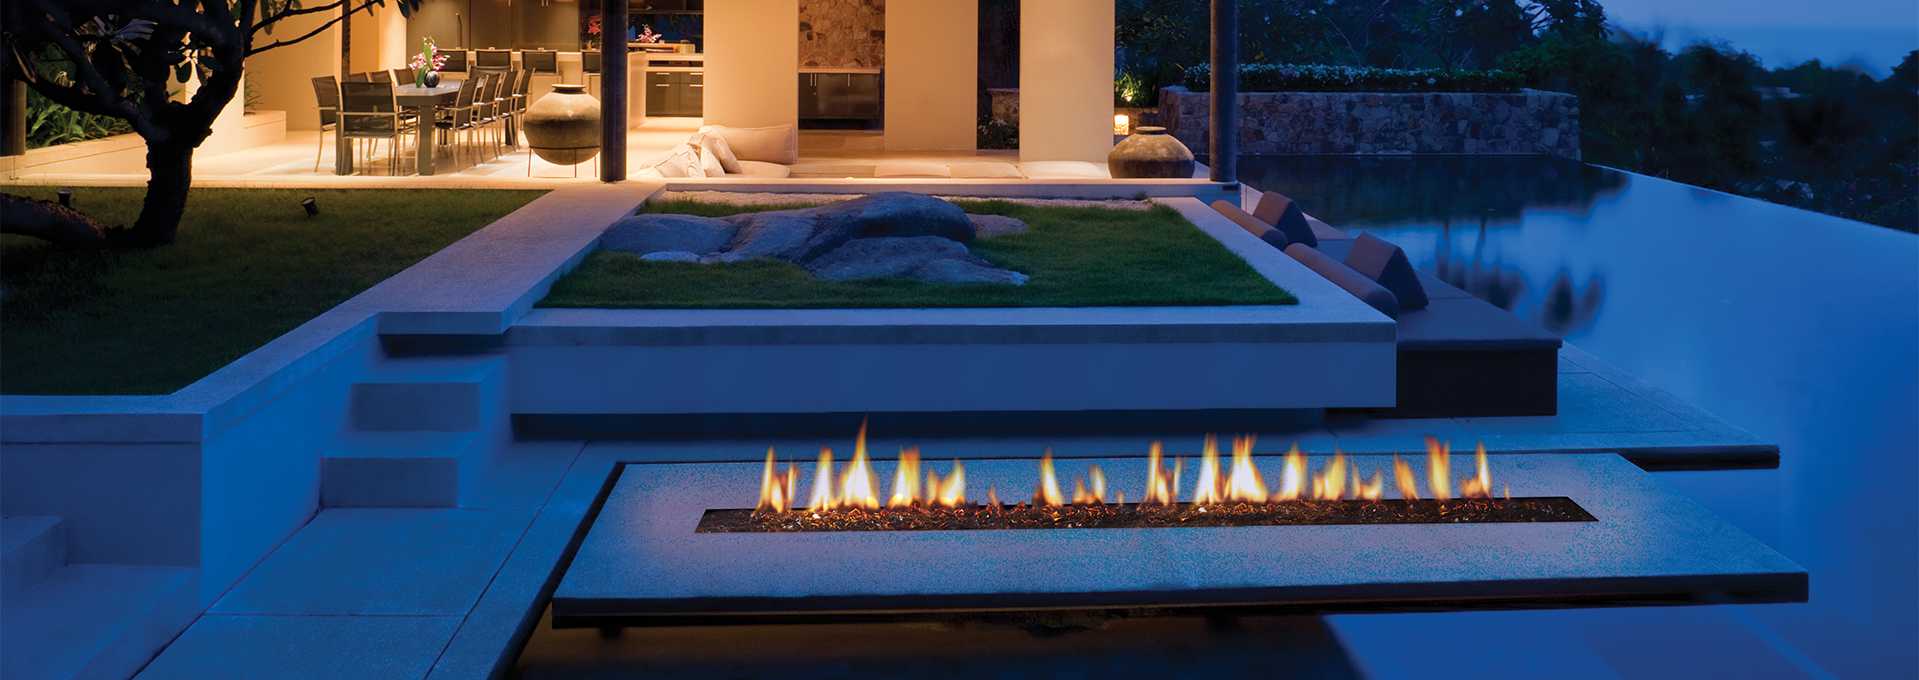 custom outdoor fireplace burners